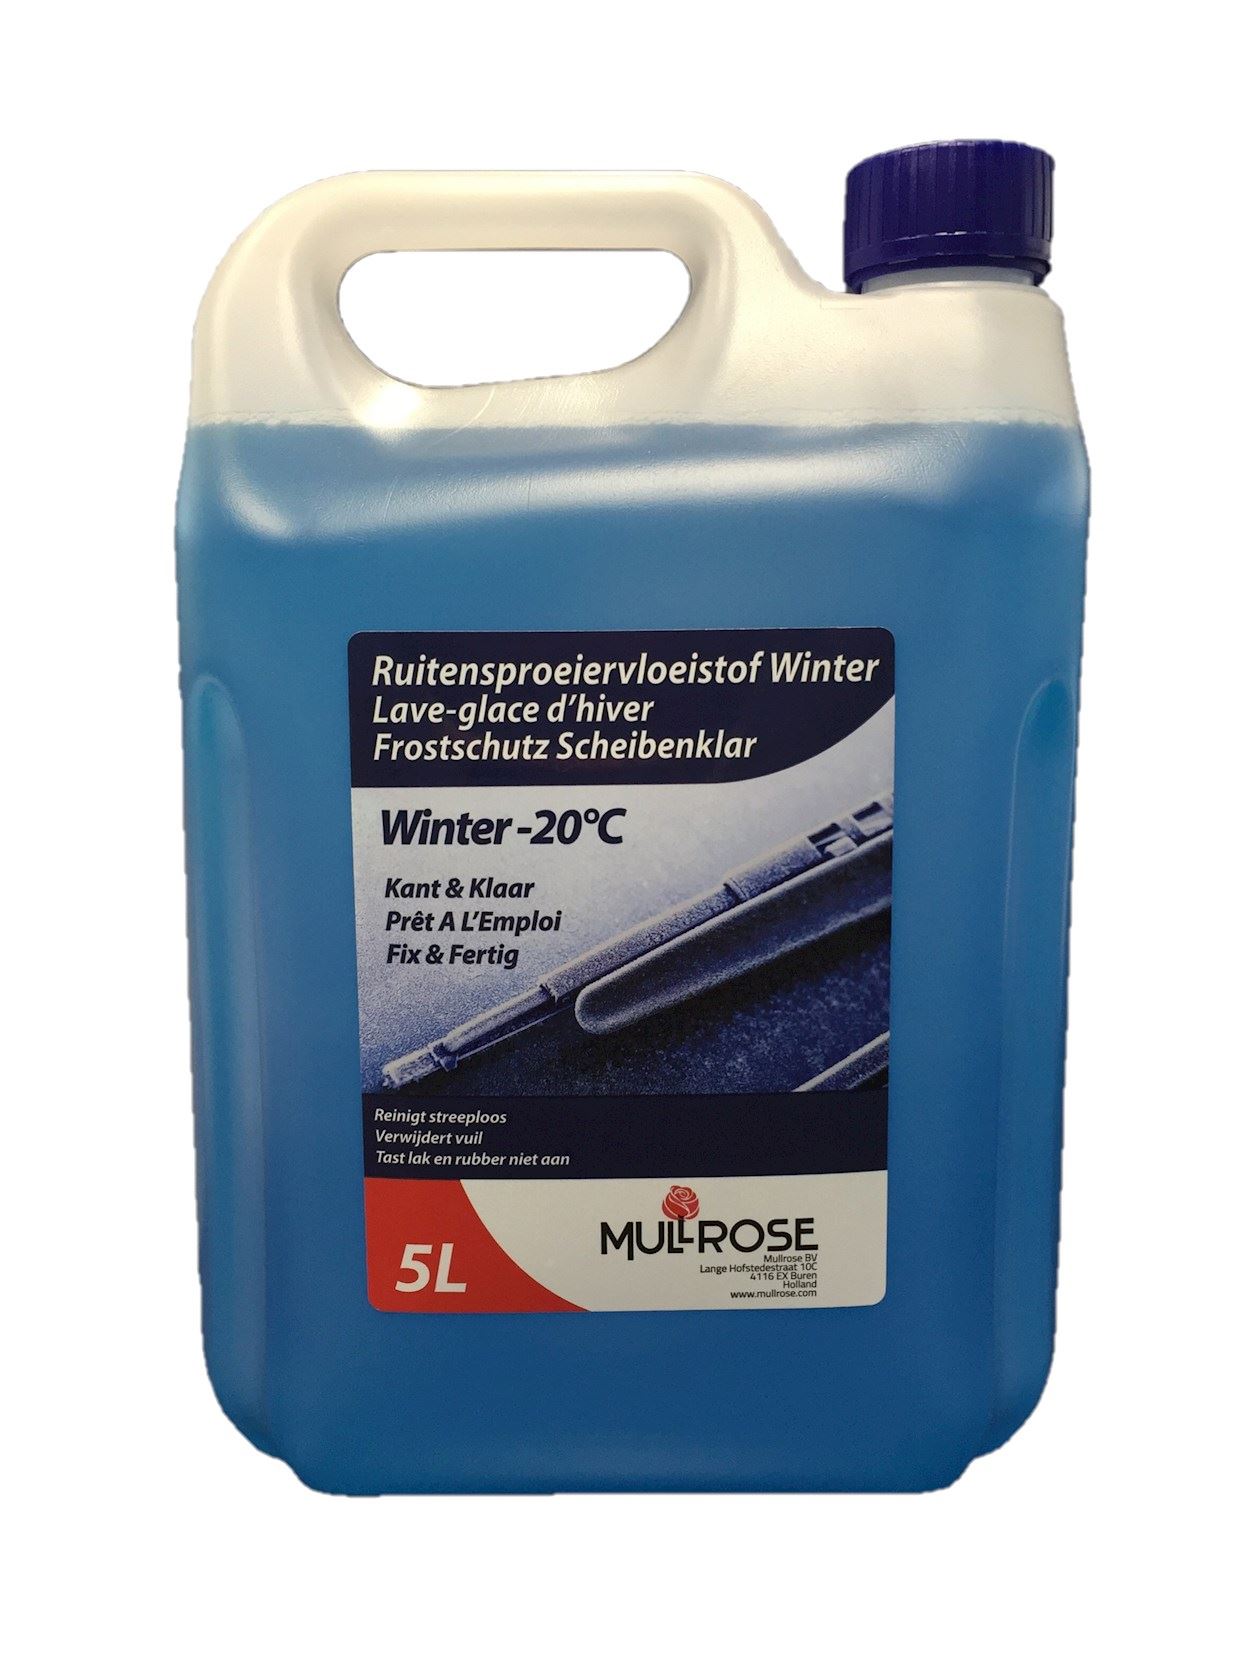 ruitenvloeistof-winter-20-C-ethanol-5l-jerrycan